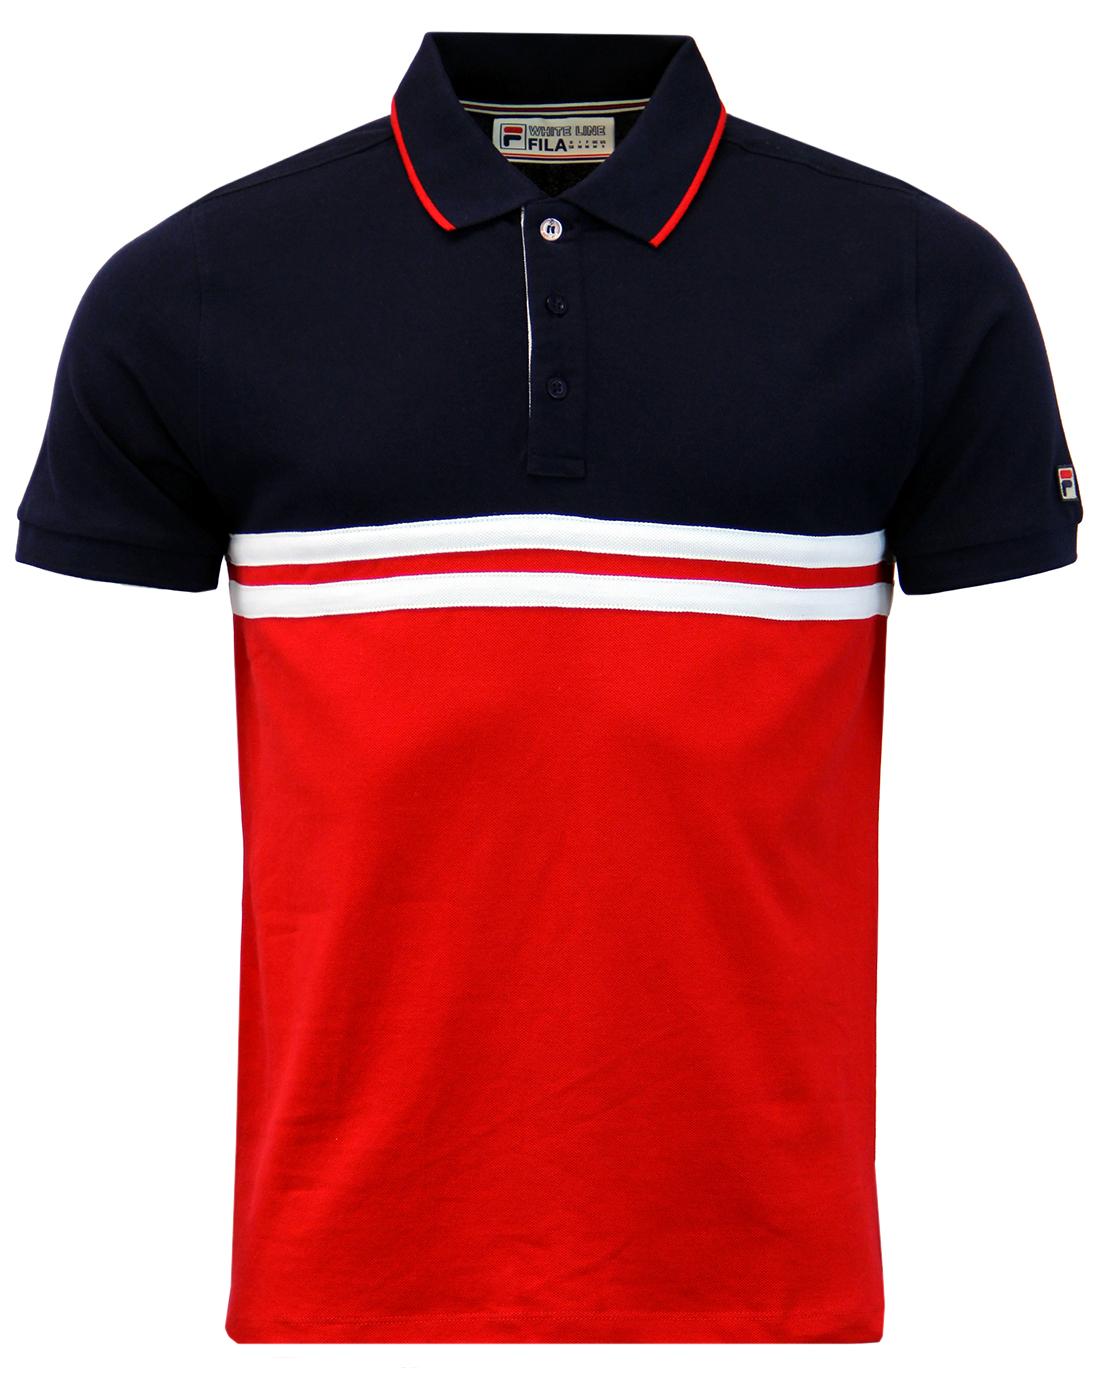 FILA VINTAGE Domenico Retro 70s Pique Polo Shirt in Red/Navy